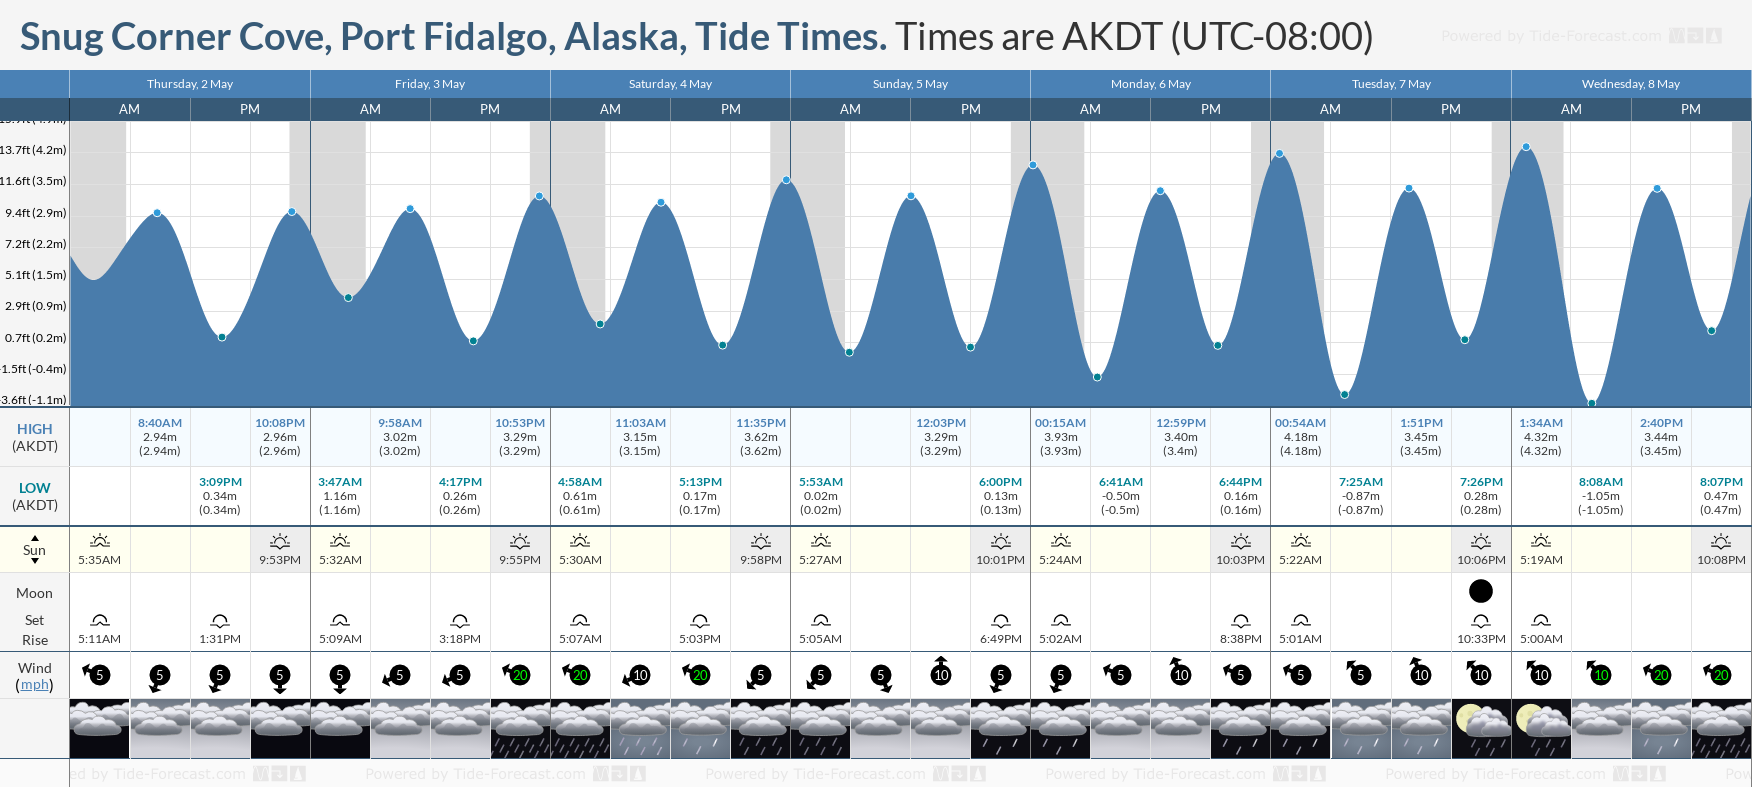 Snug Corner Cove, Port Fidalgo, Alaska Tide Chart including high and low tide tide times for the next 7 days